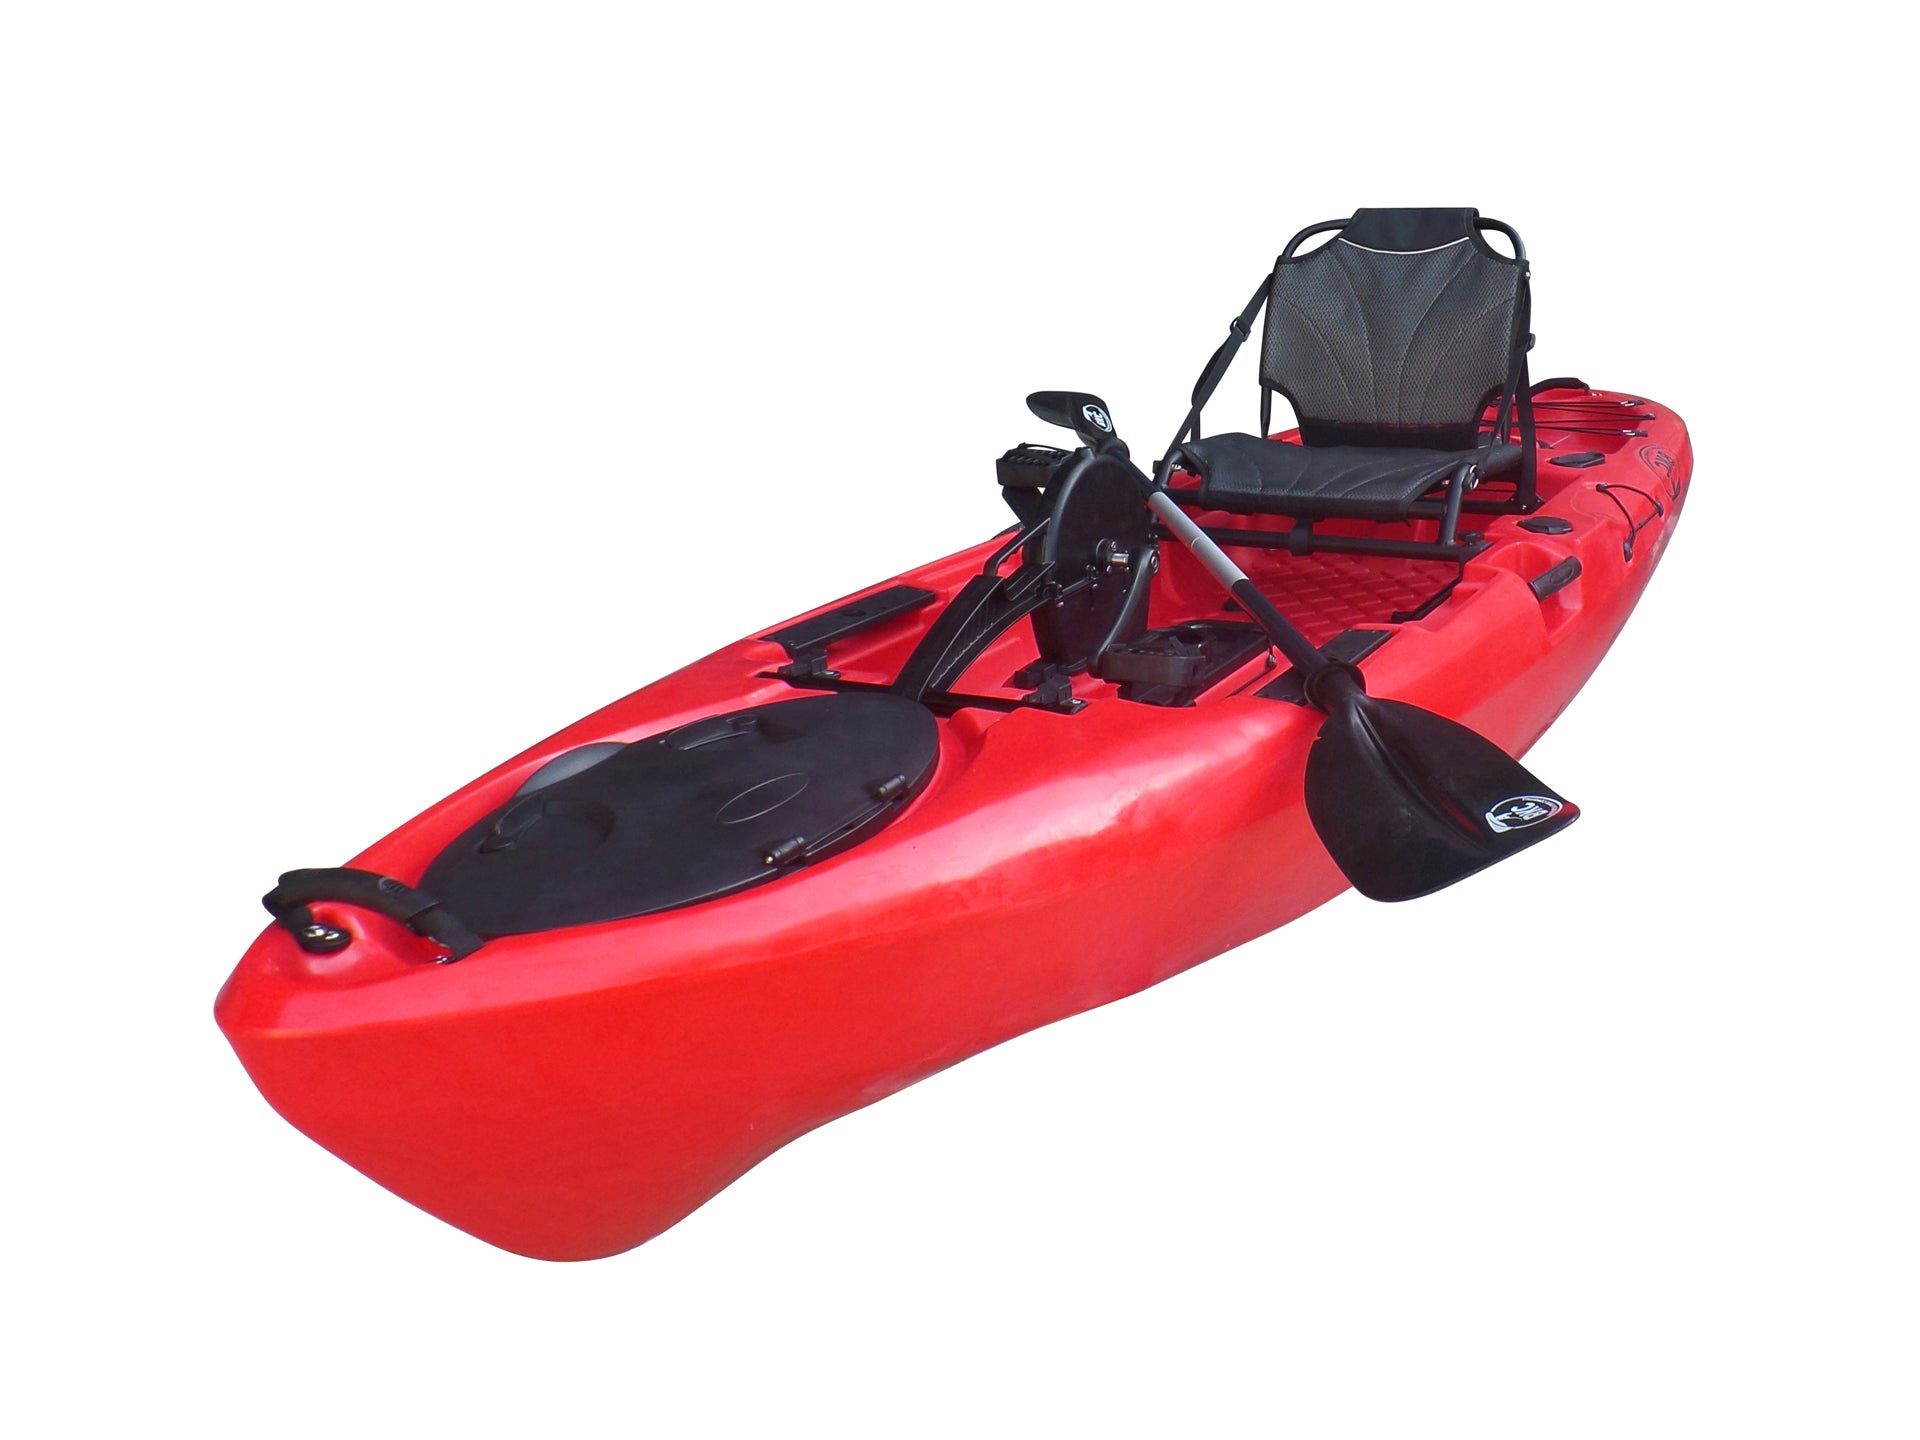 Clarifying Kayak Weight Capacity - Brooklyn Kayak Company